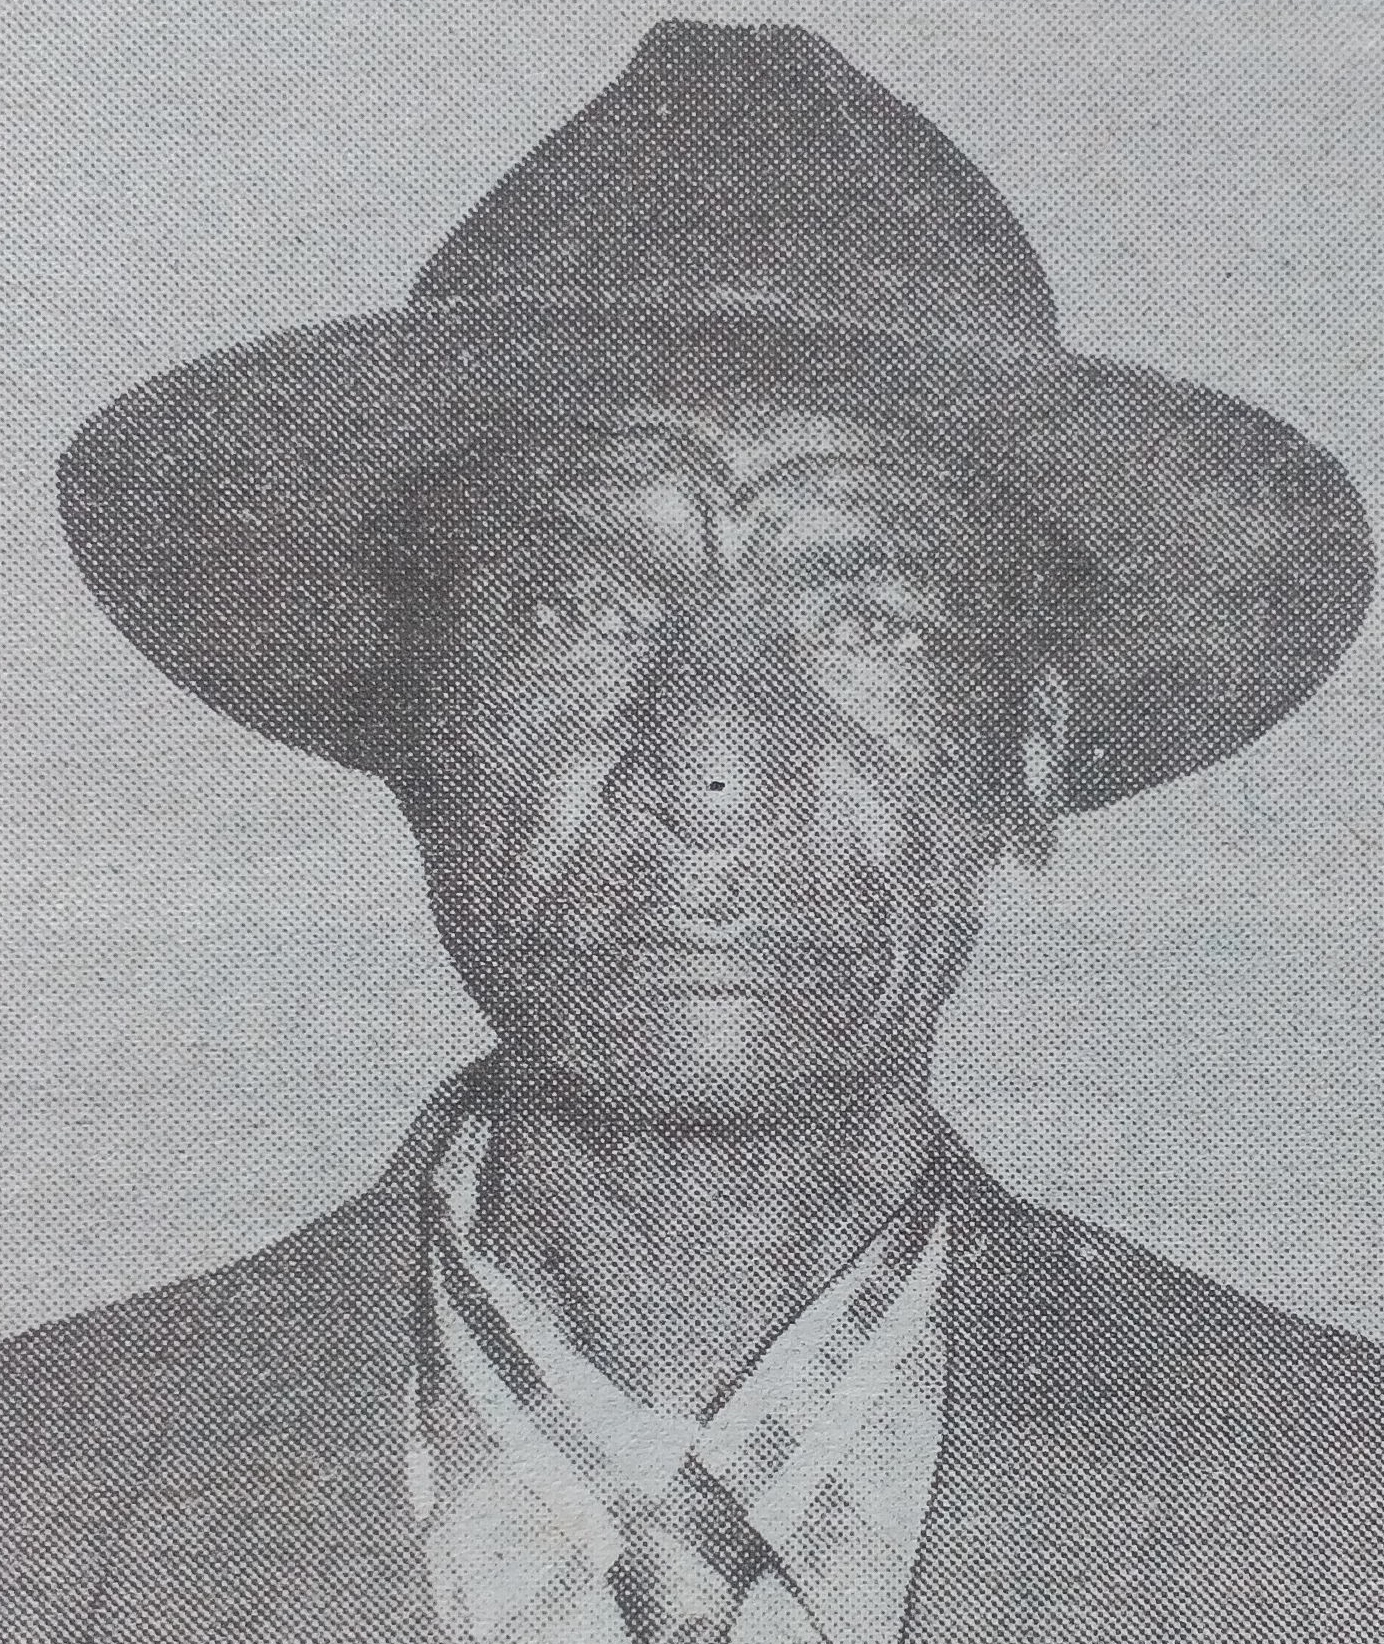 Obituary Image of Mzee George Omani Nyayiemi